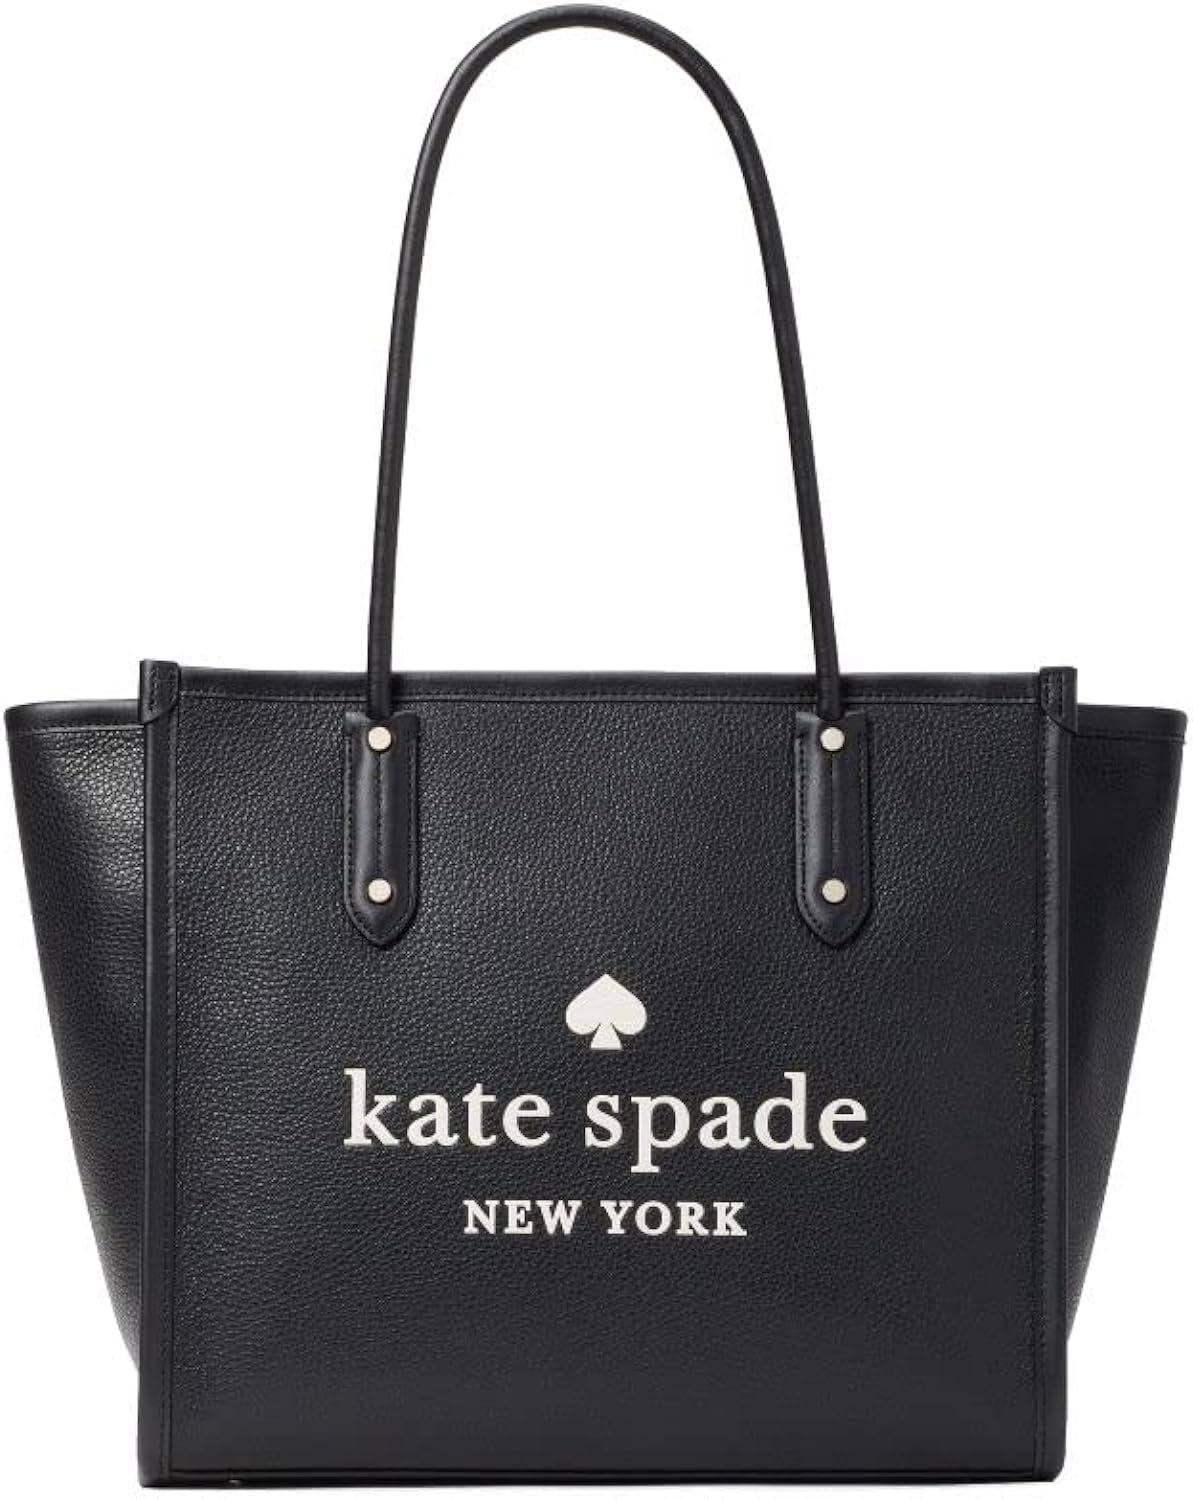 Kate Spade Ella Tote Leather Handbag Review - Live & Work Smart